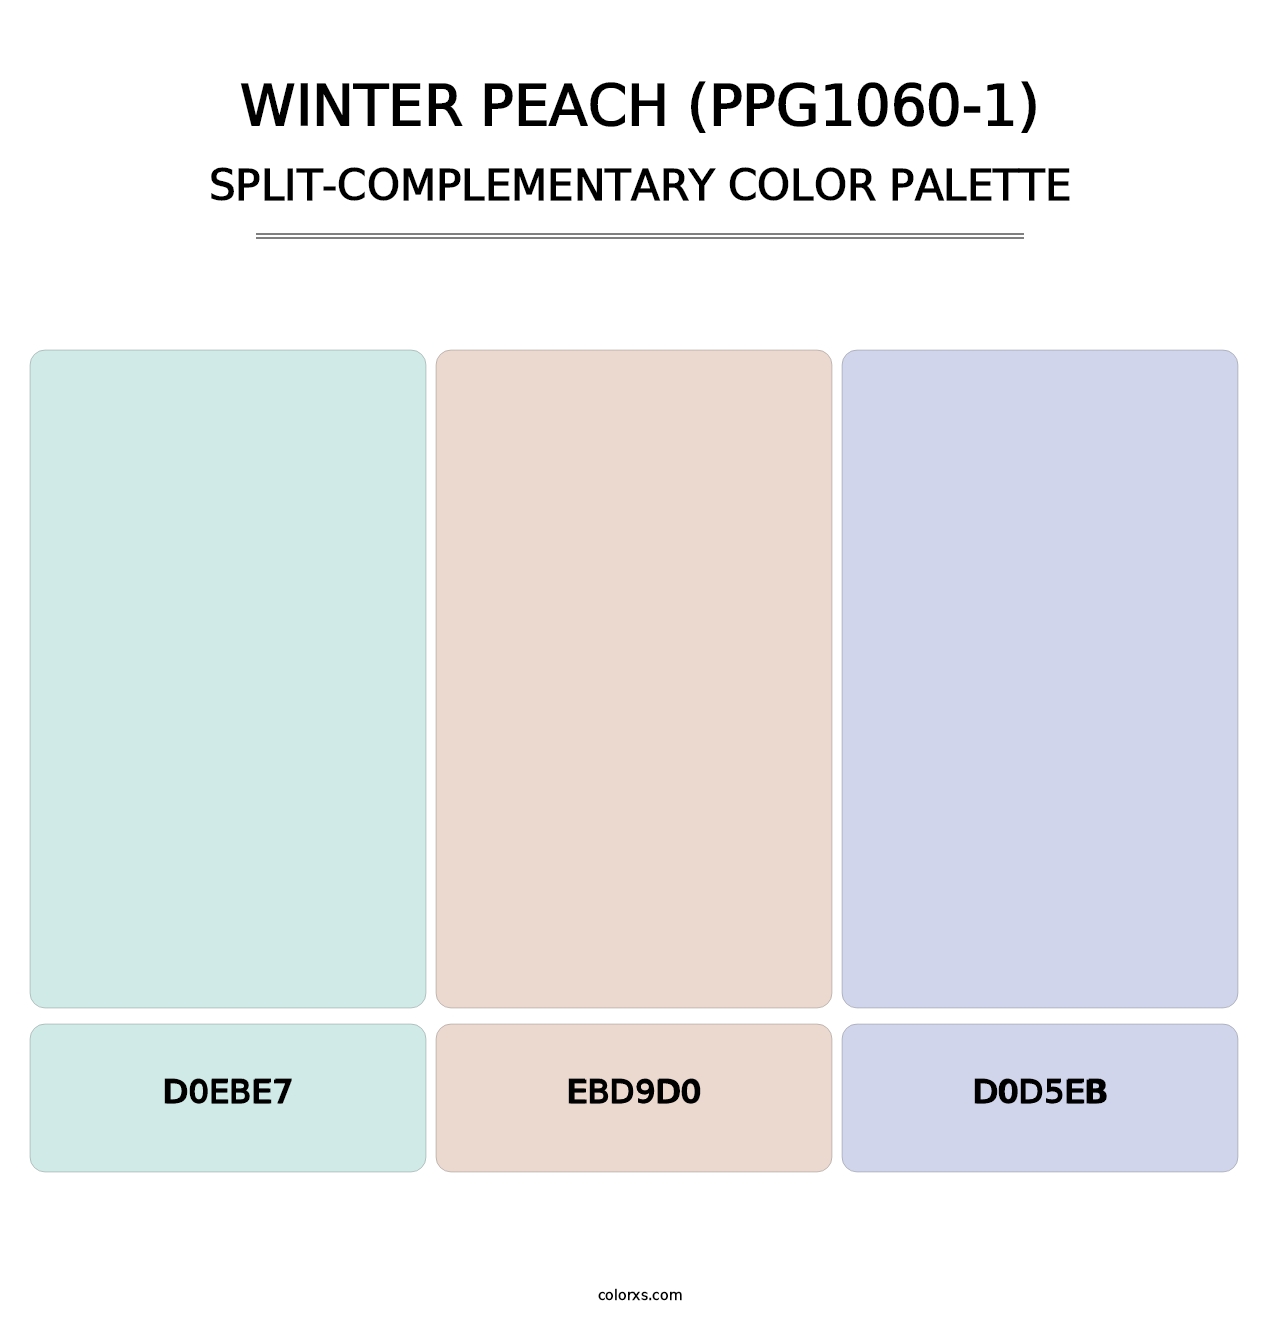 Winter Peach (PPG1060-1) - Split-Complementary Color Palette